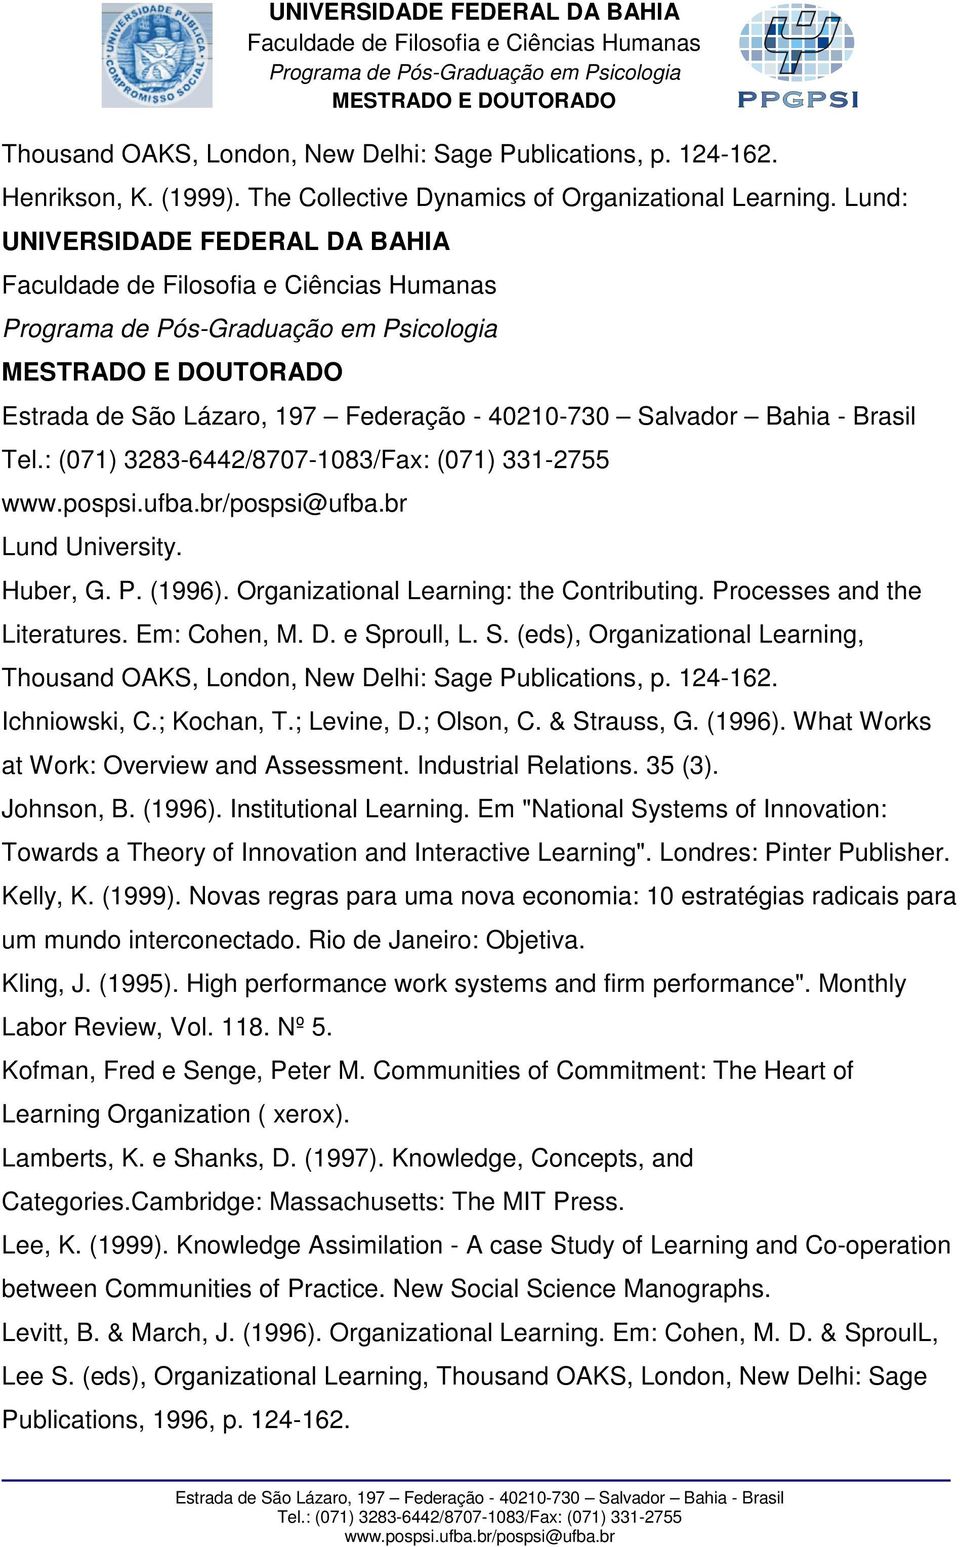 roull, L. S. (eds), Organizational Learning, Thousand OAKS, London, New Delhi: Sage Publications, p. 124-162. Ichniowski, C.; Kochan, T.; Levine, D.; Olson, C. & Strauss, G. (1996).